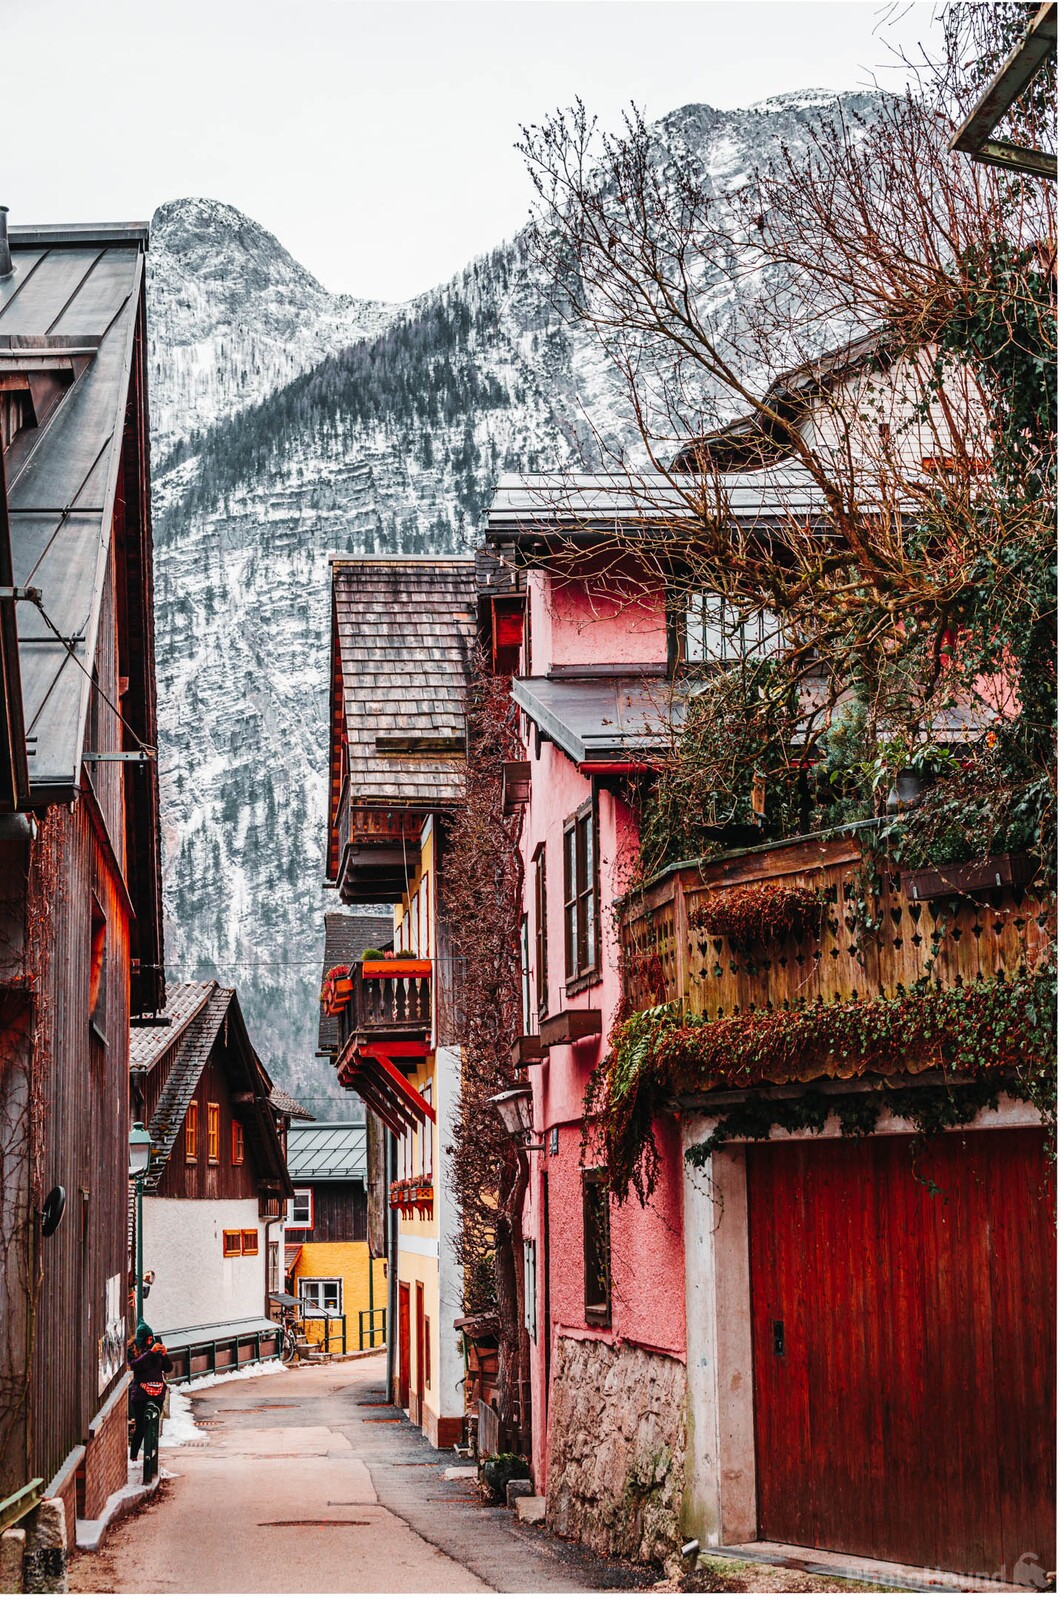 Image of Hallstatt village by Szabolcs Gulacsi